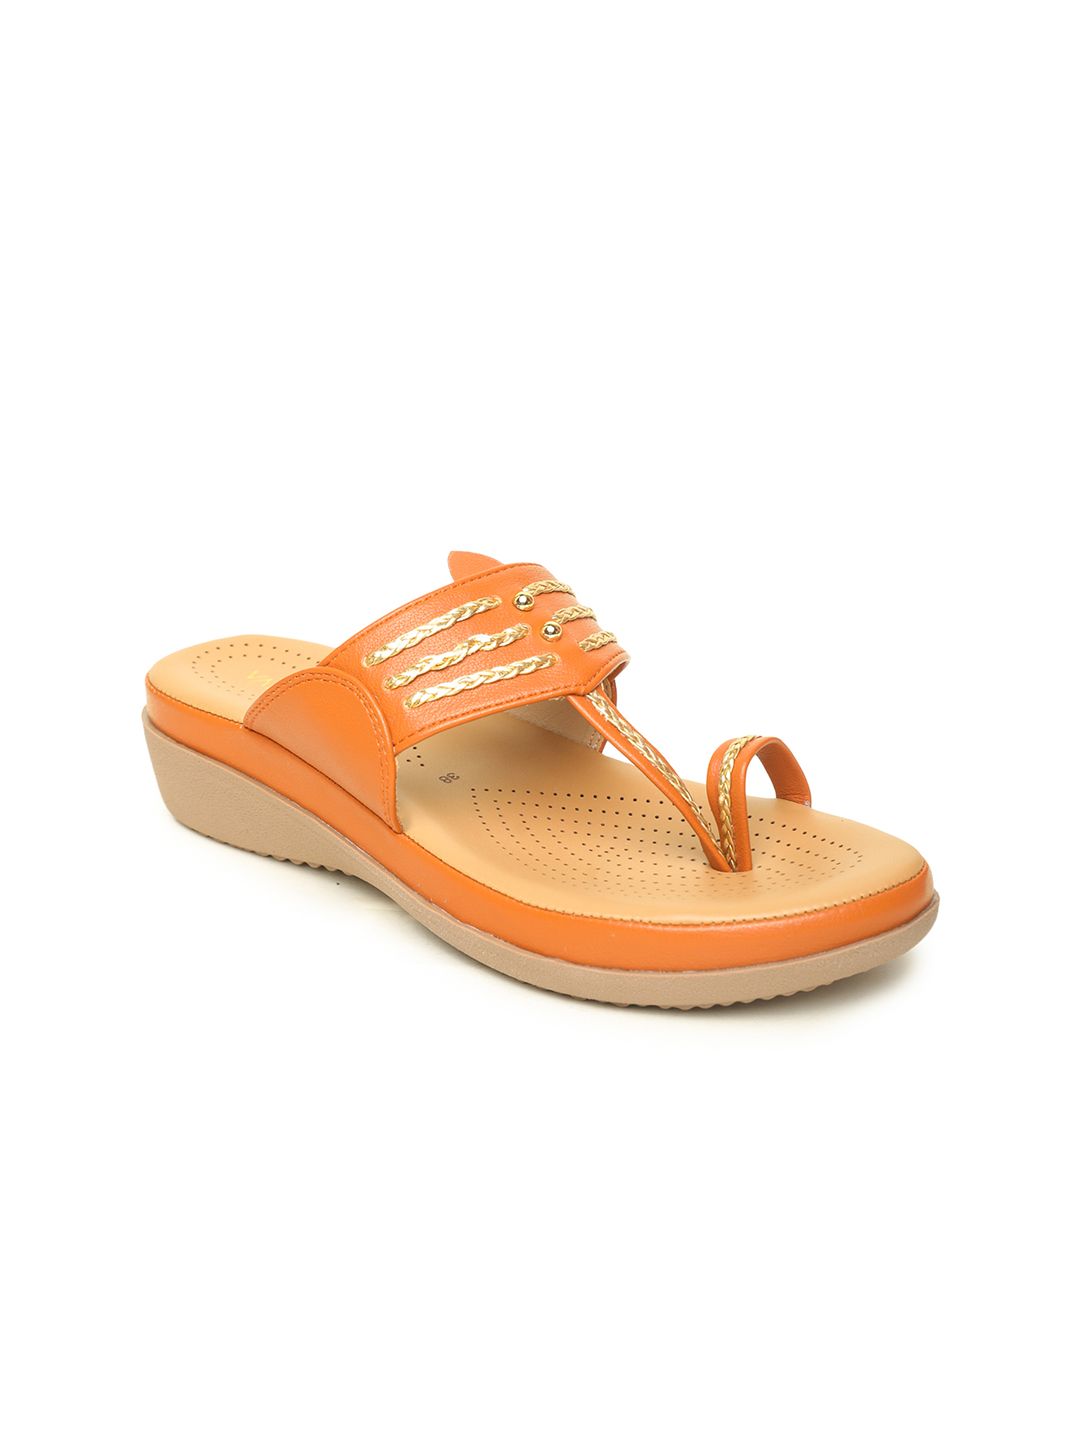 VALIOSAA Tan Wedge Sandals Price in India